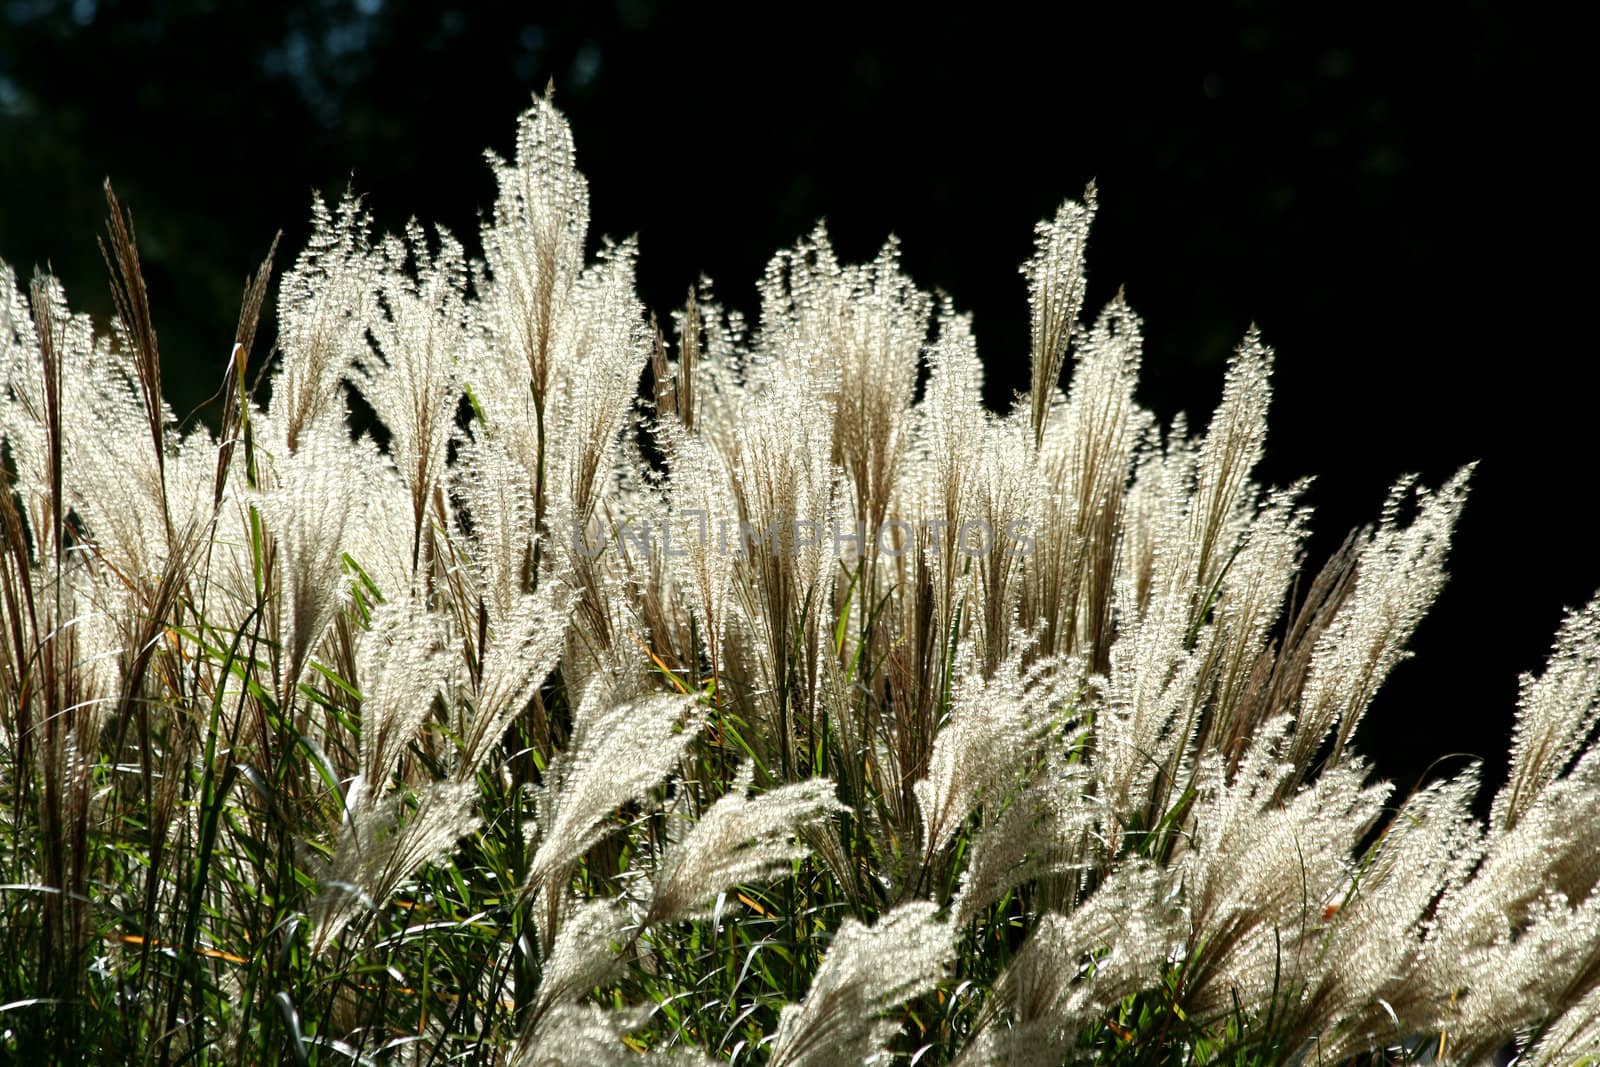 A Backlit tall grassy plant